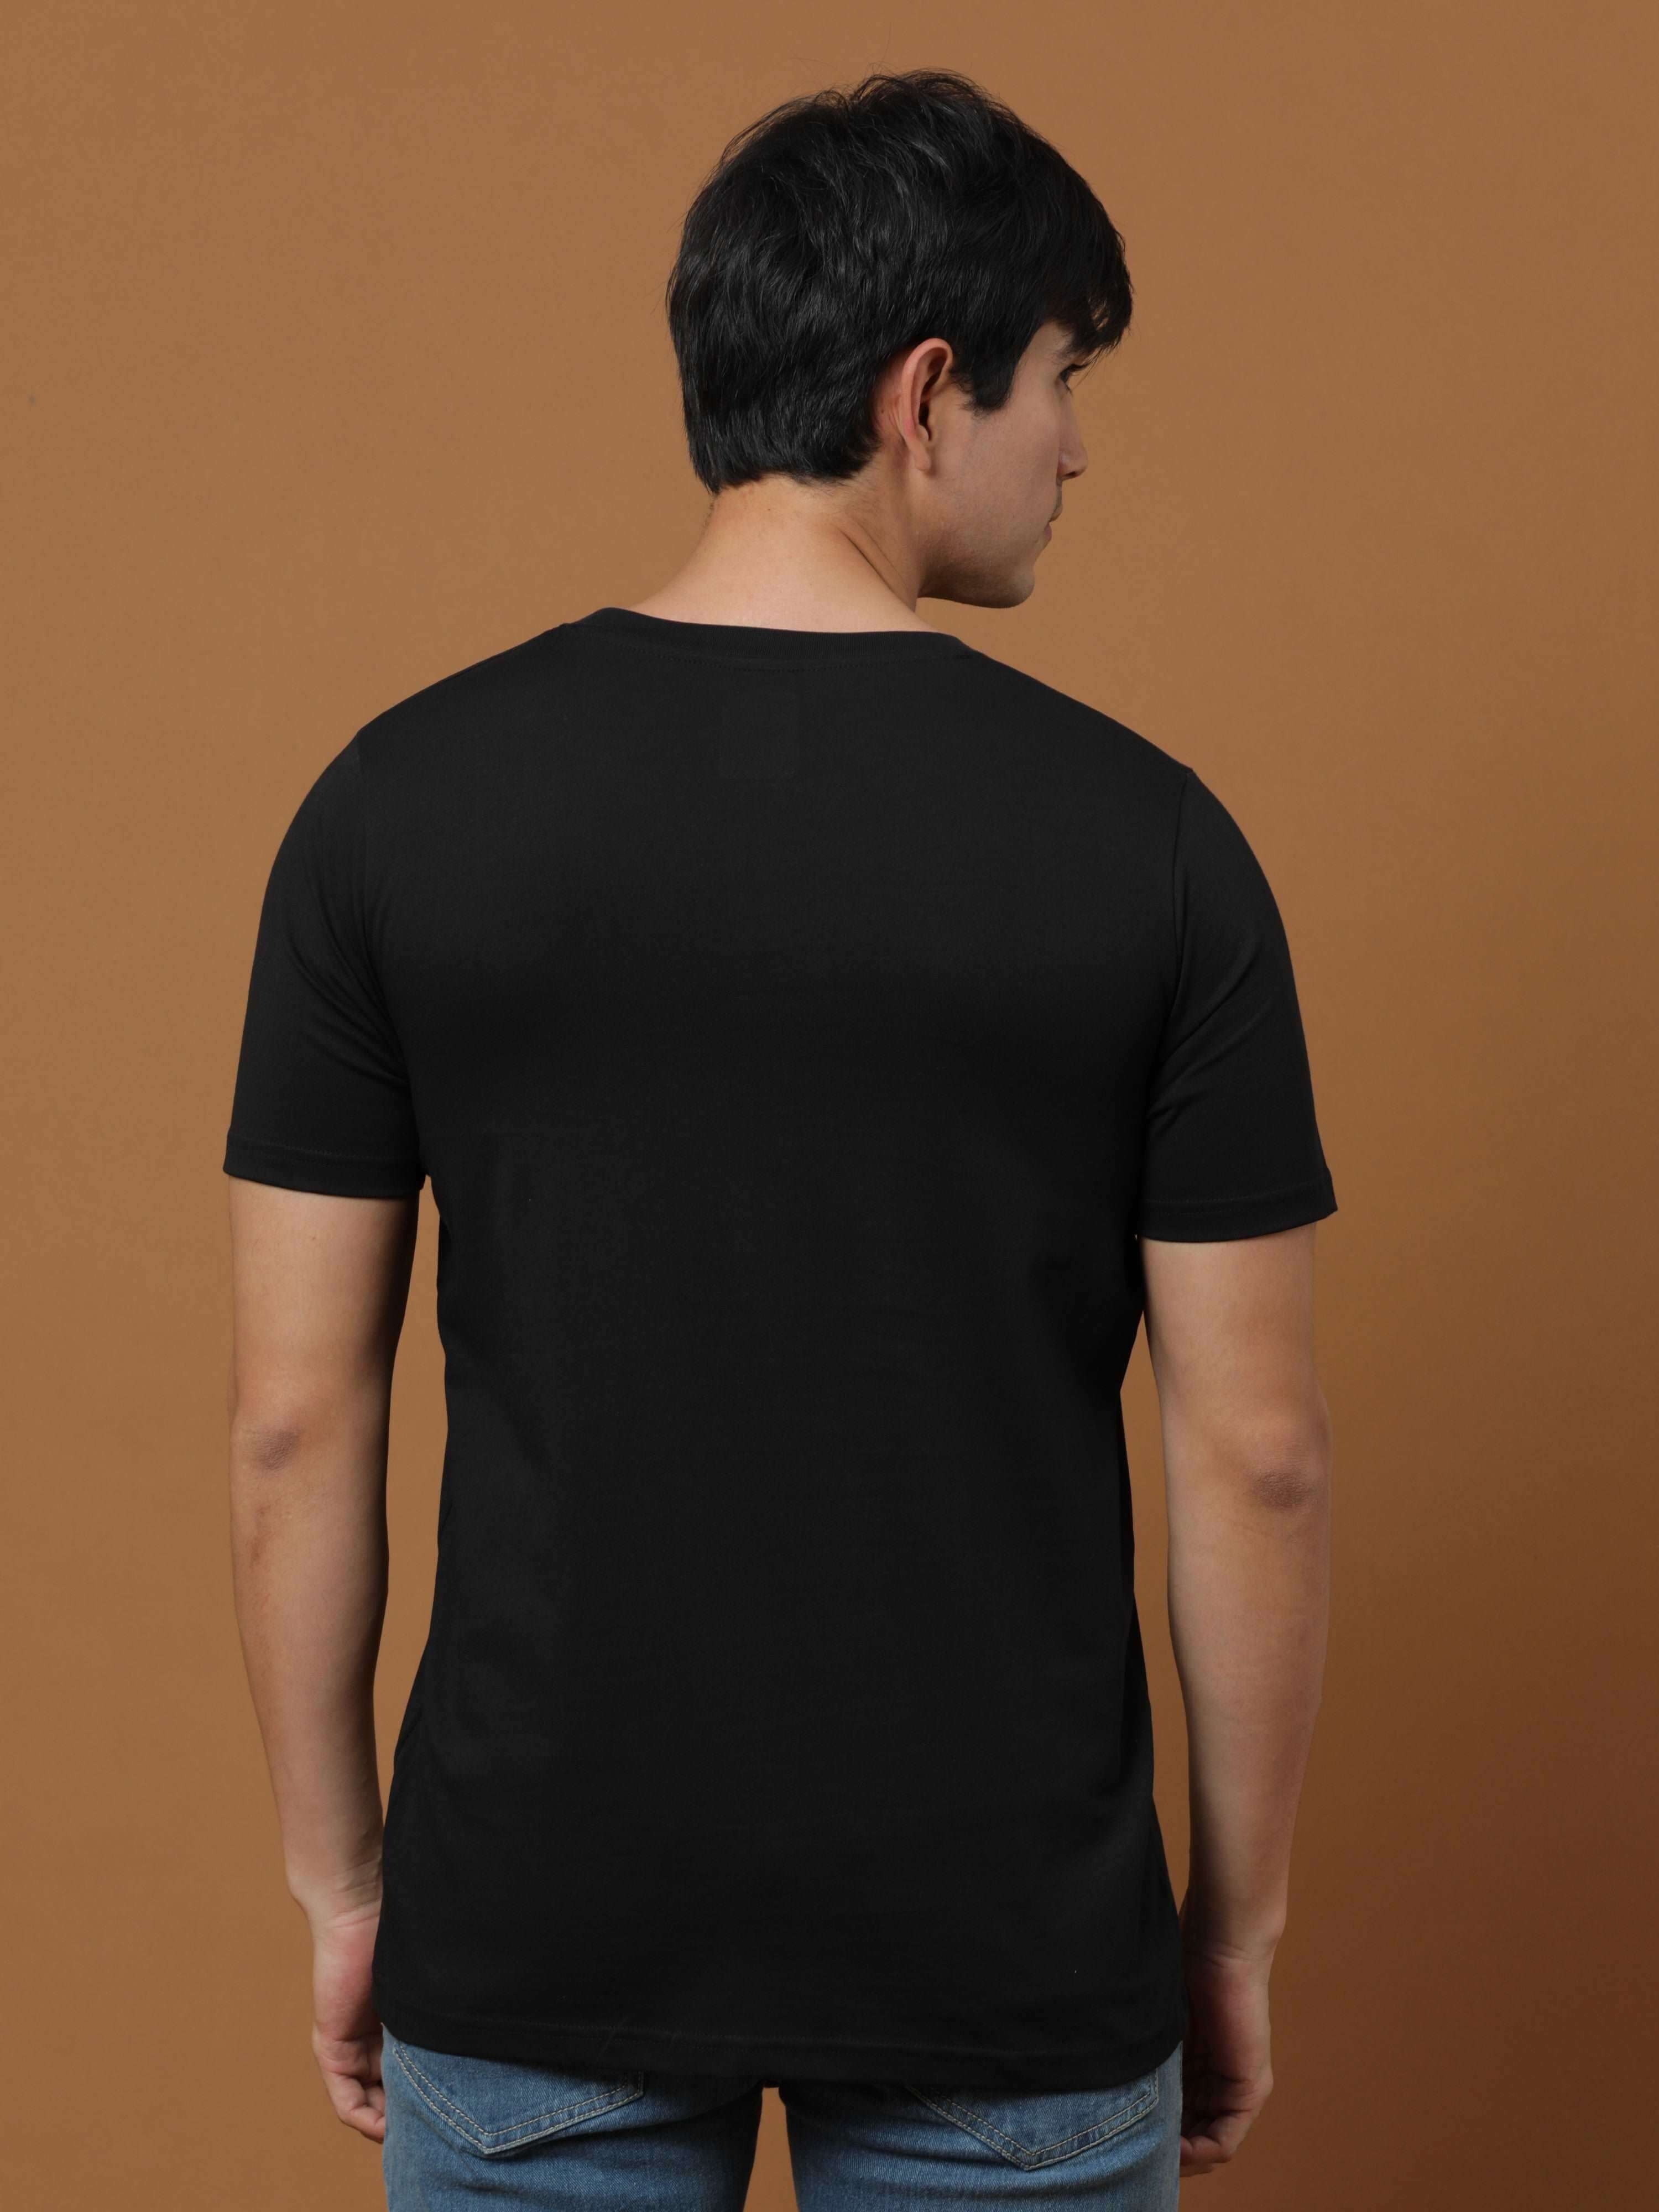 Camping Edition Black Printed T Shirt_ T-SHIRT_ estilocus